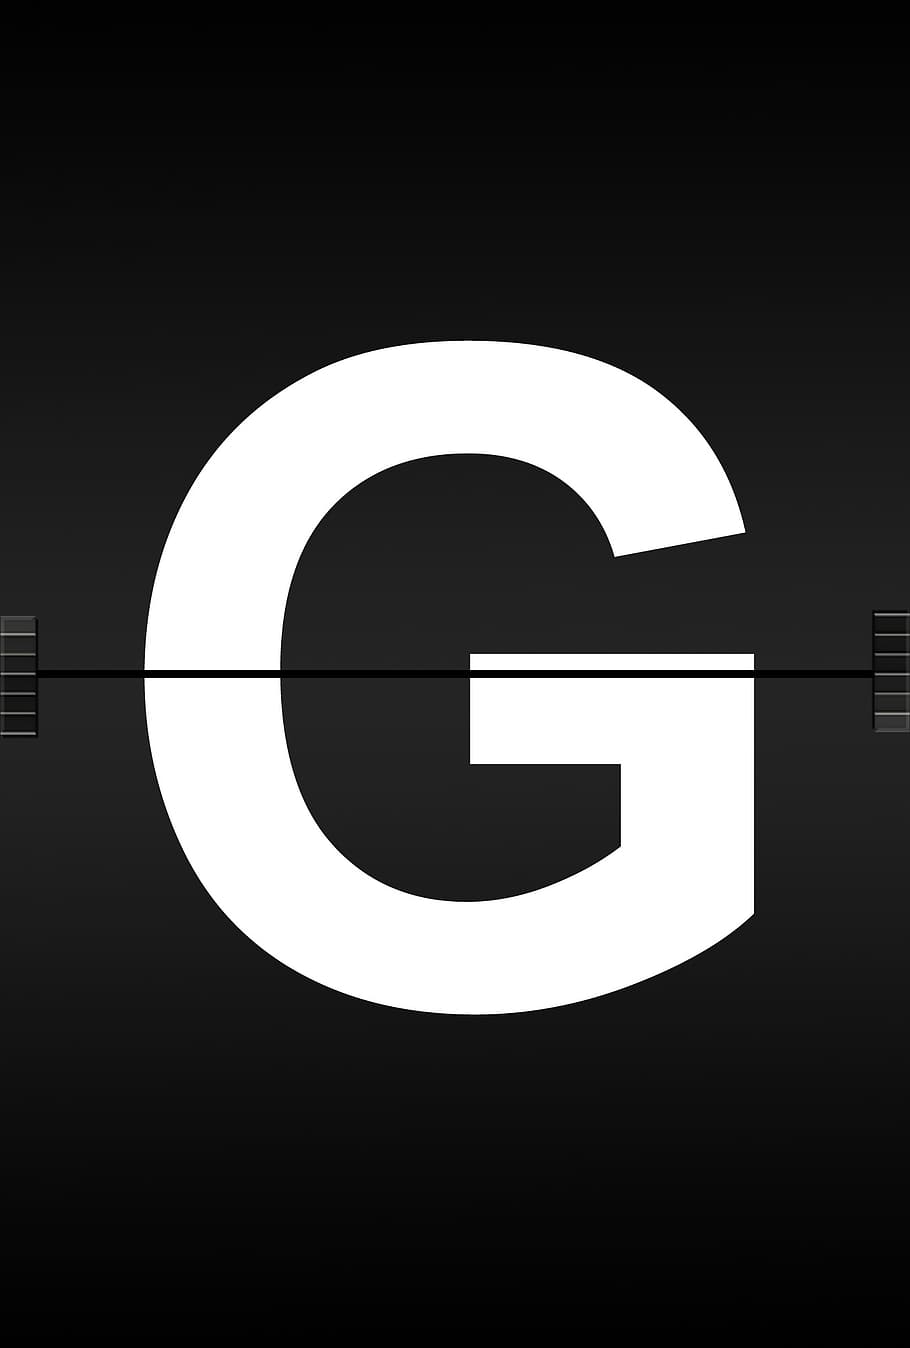 G logo, letters, abc, alphabet, journal font, airport, scoreboard, HD wallpaper